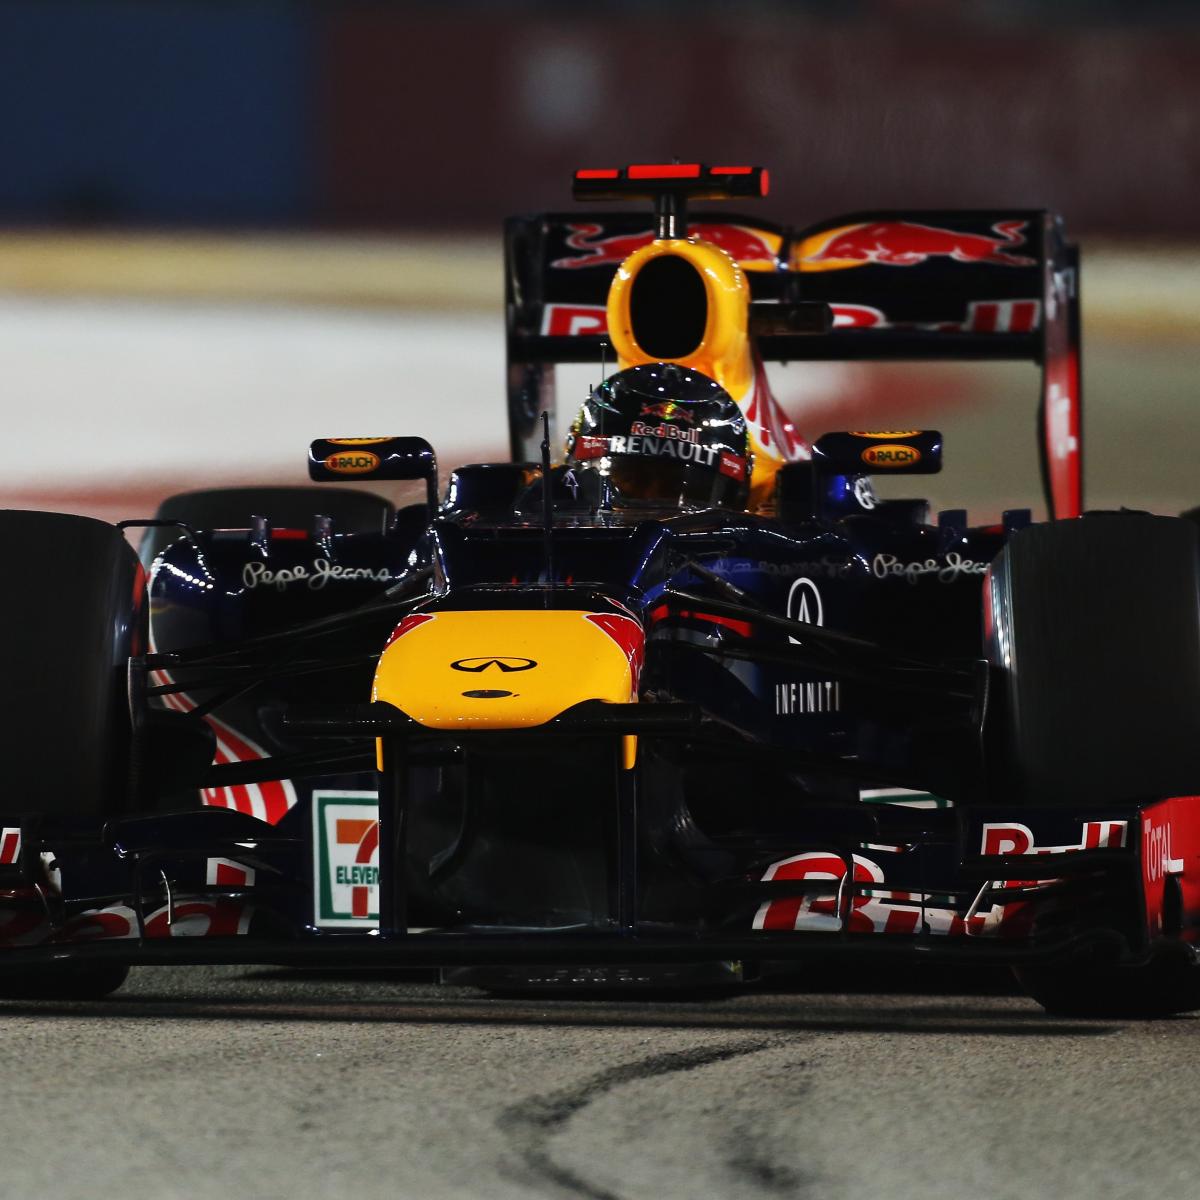 F1 champion Vettel: Red Bull will be slower in 2012